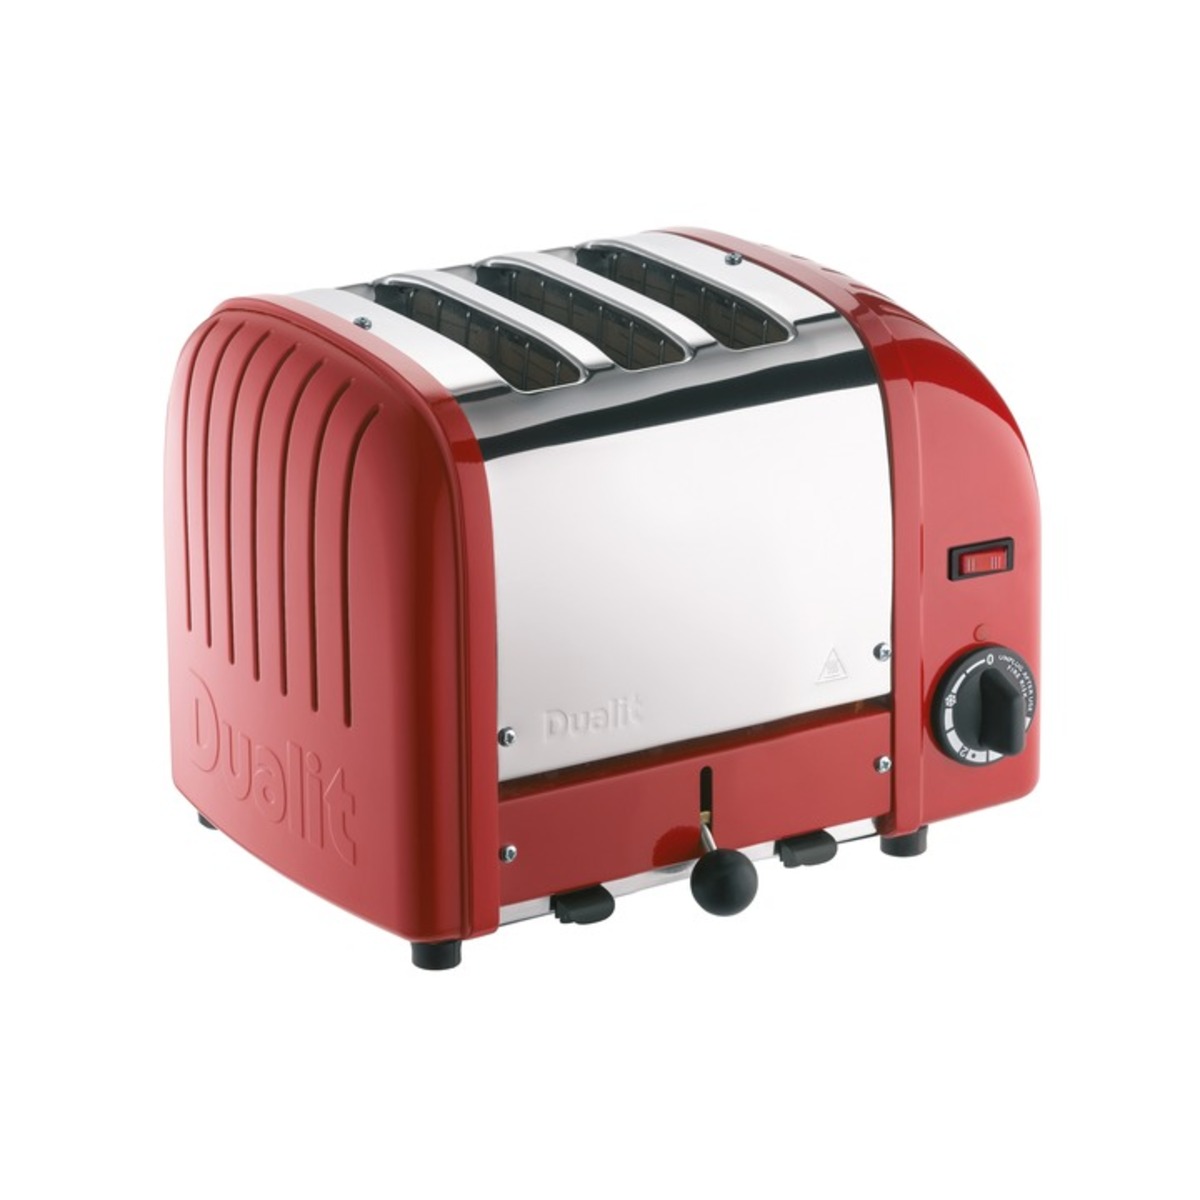 Dualit 30085 3 Slot Vario Toaster, Red